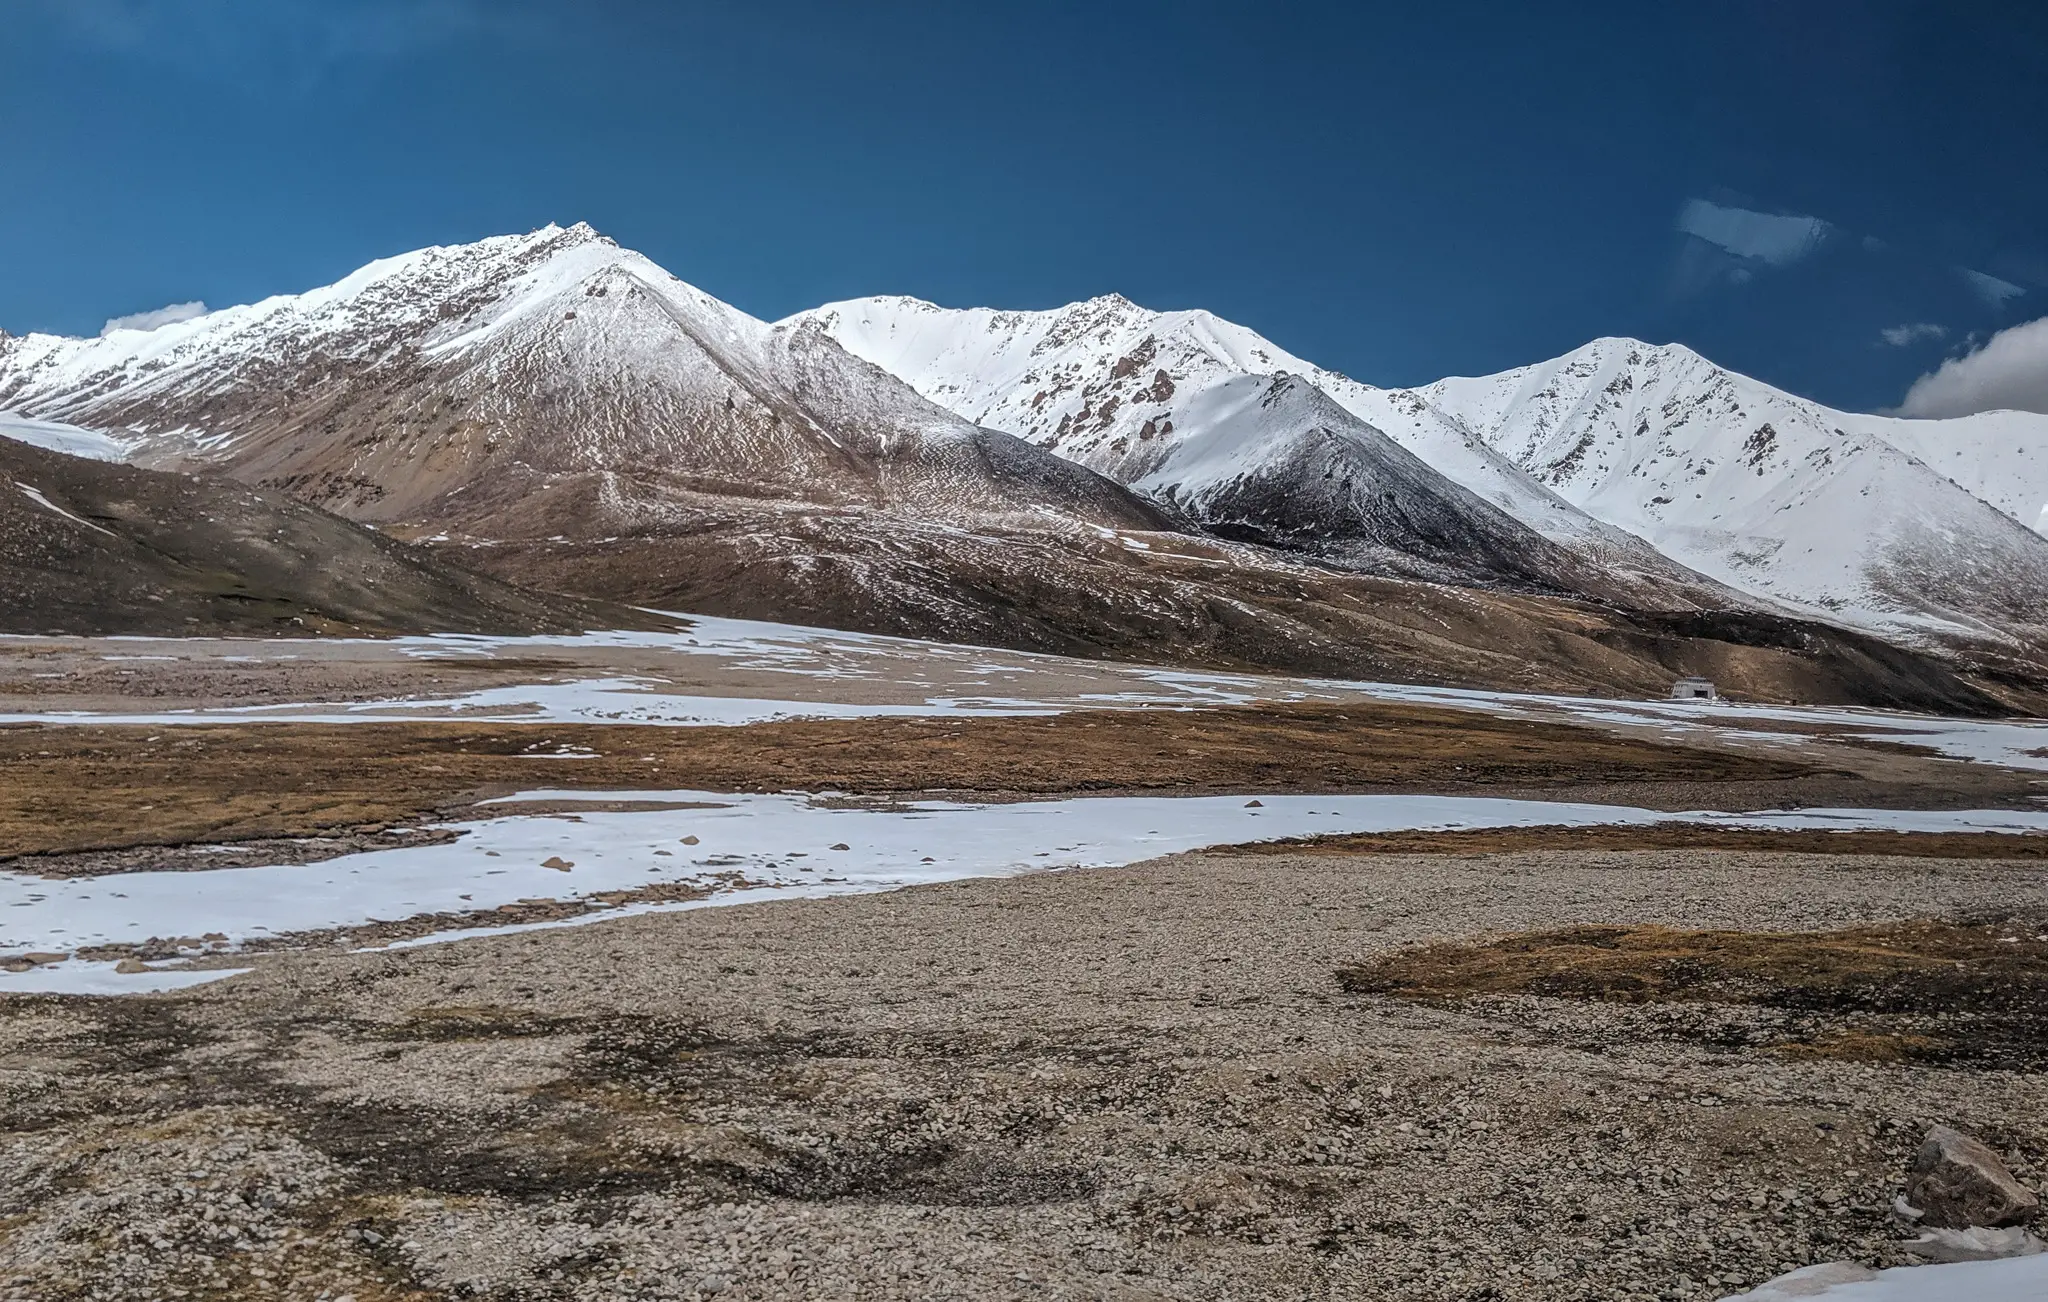 At the top of Khunjerab Pass